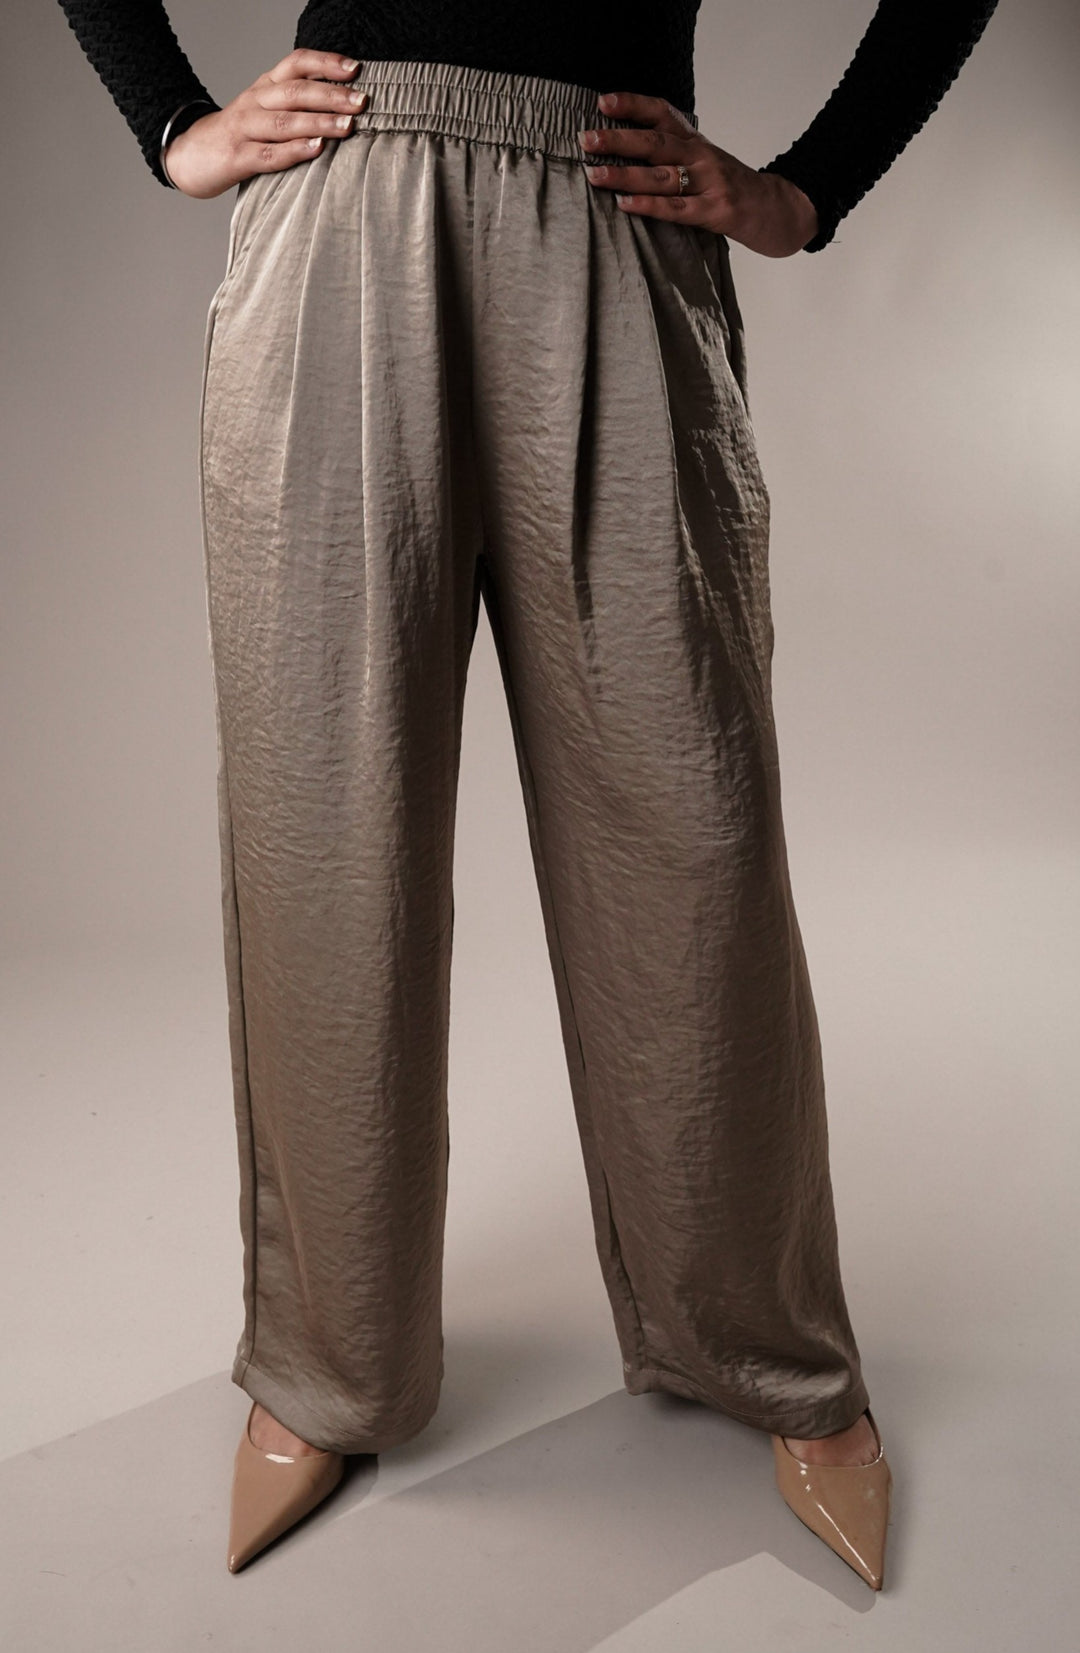 Elegant wide leg satin trousers for work attire